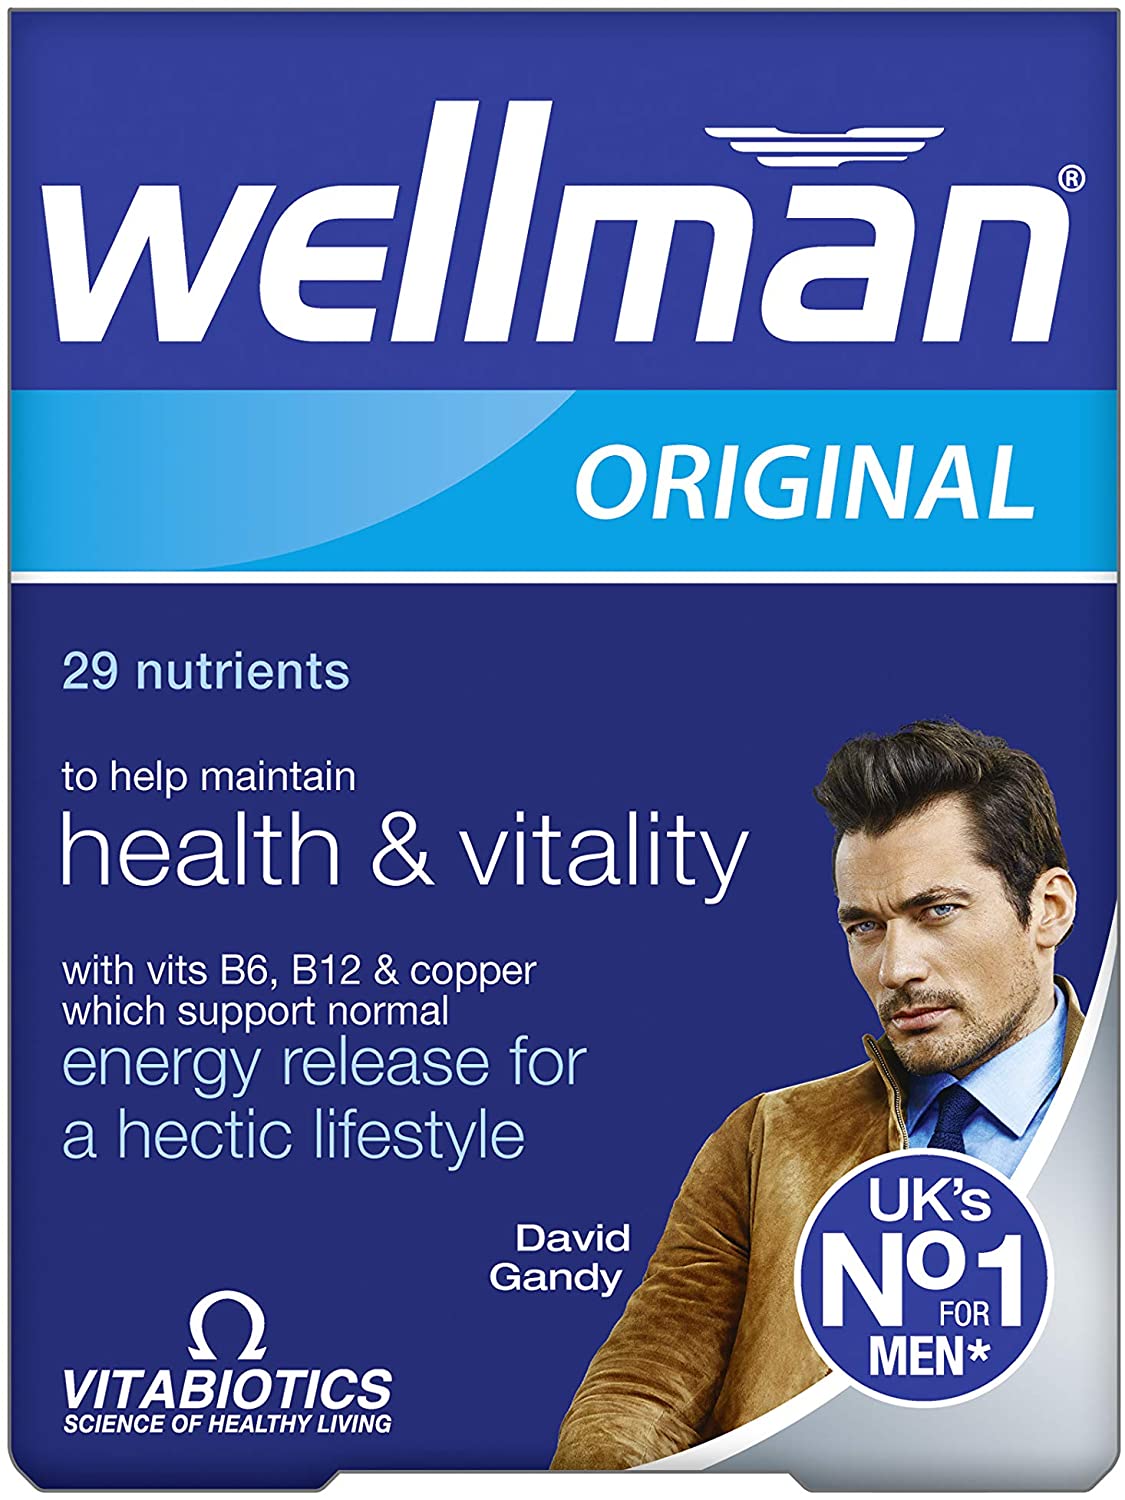 Wellman Vitabiotics Original Foodwrite